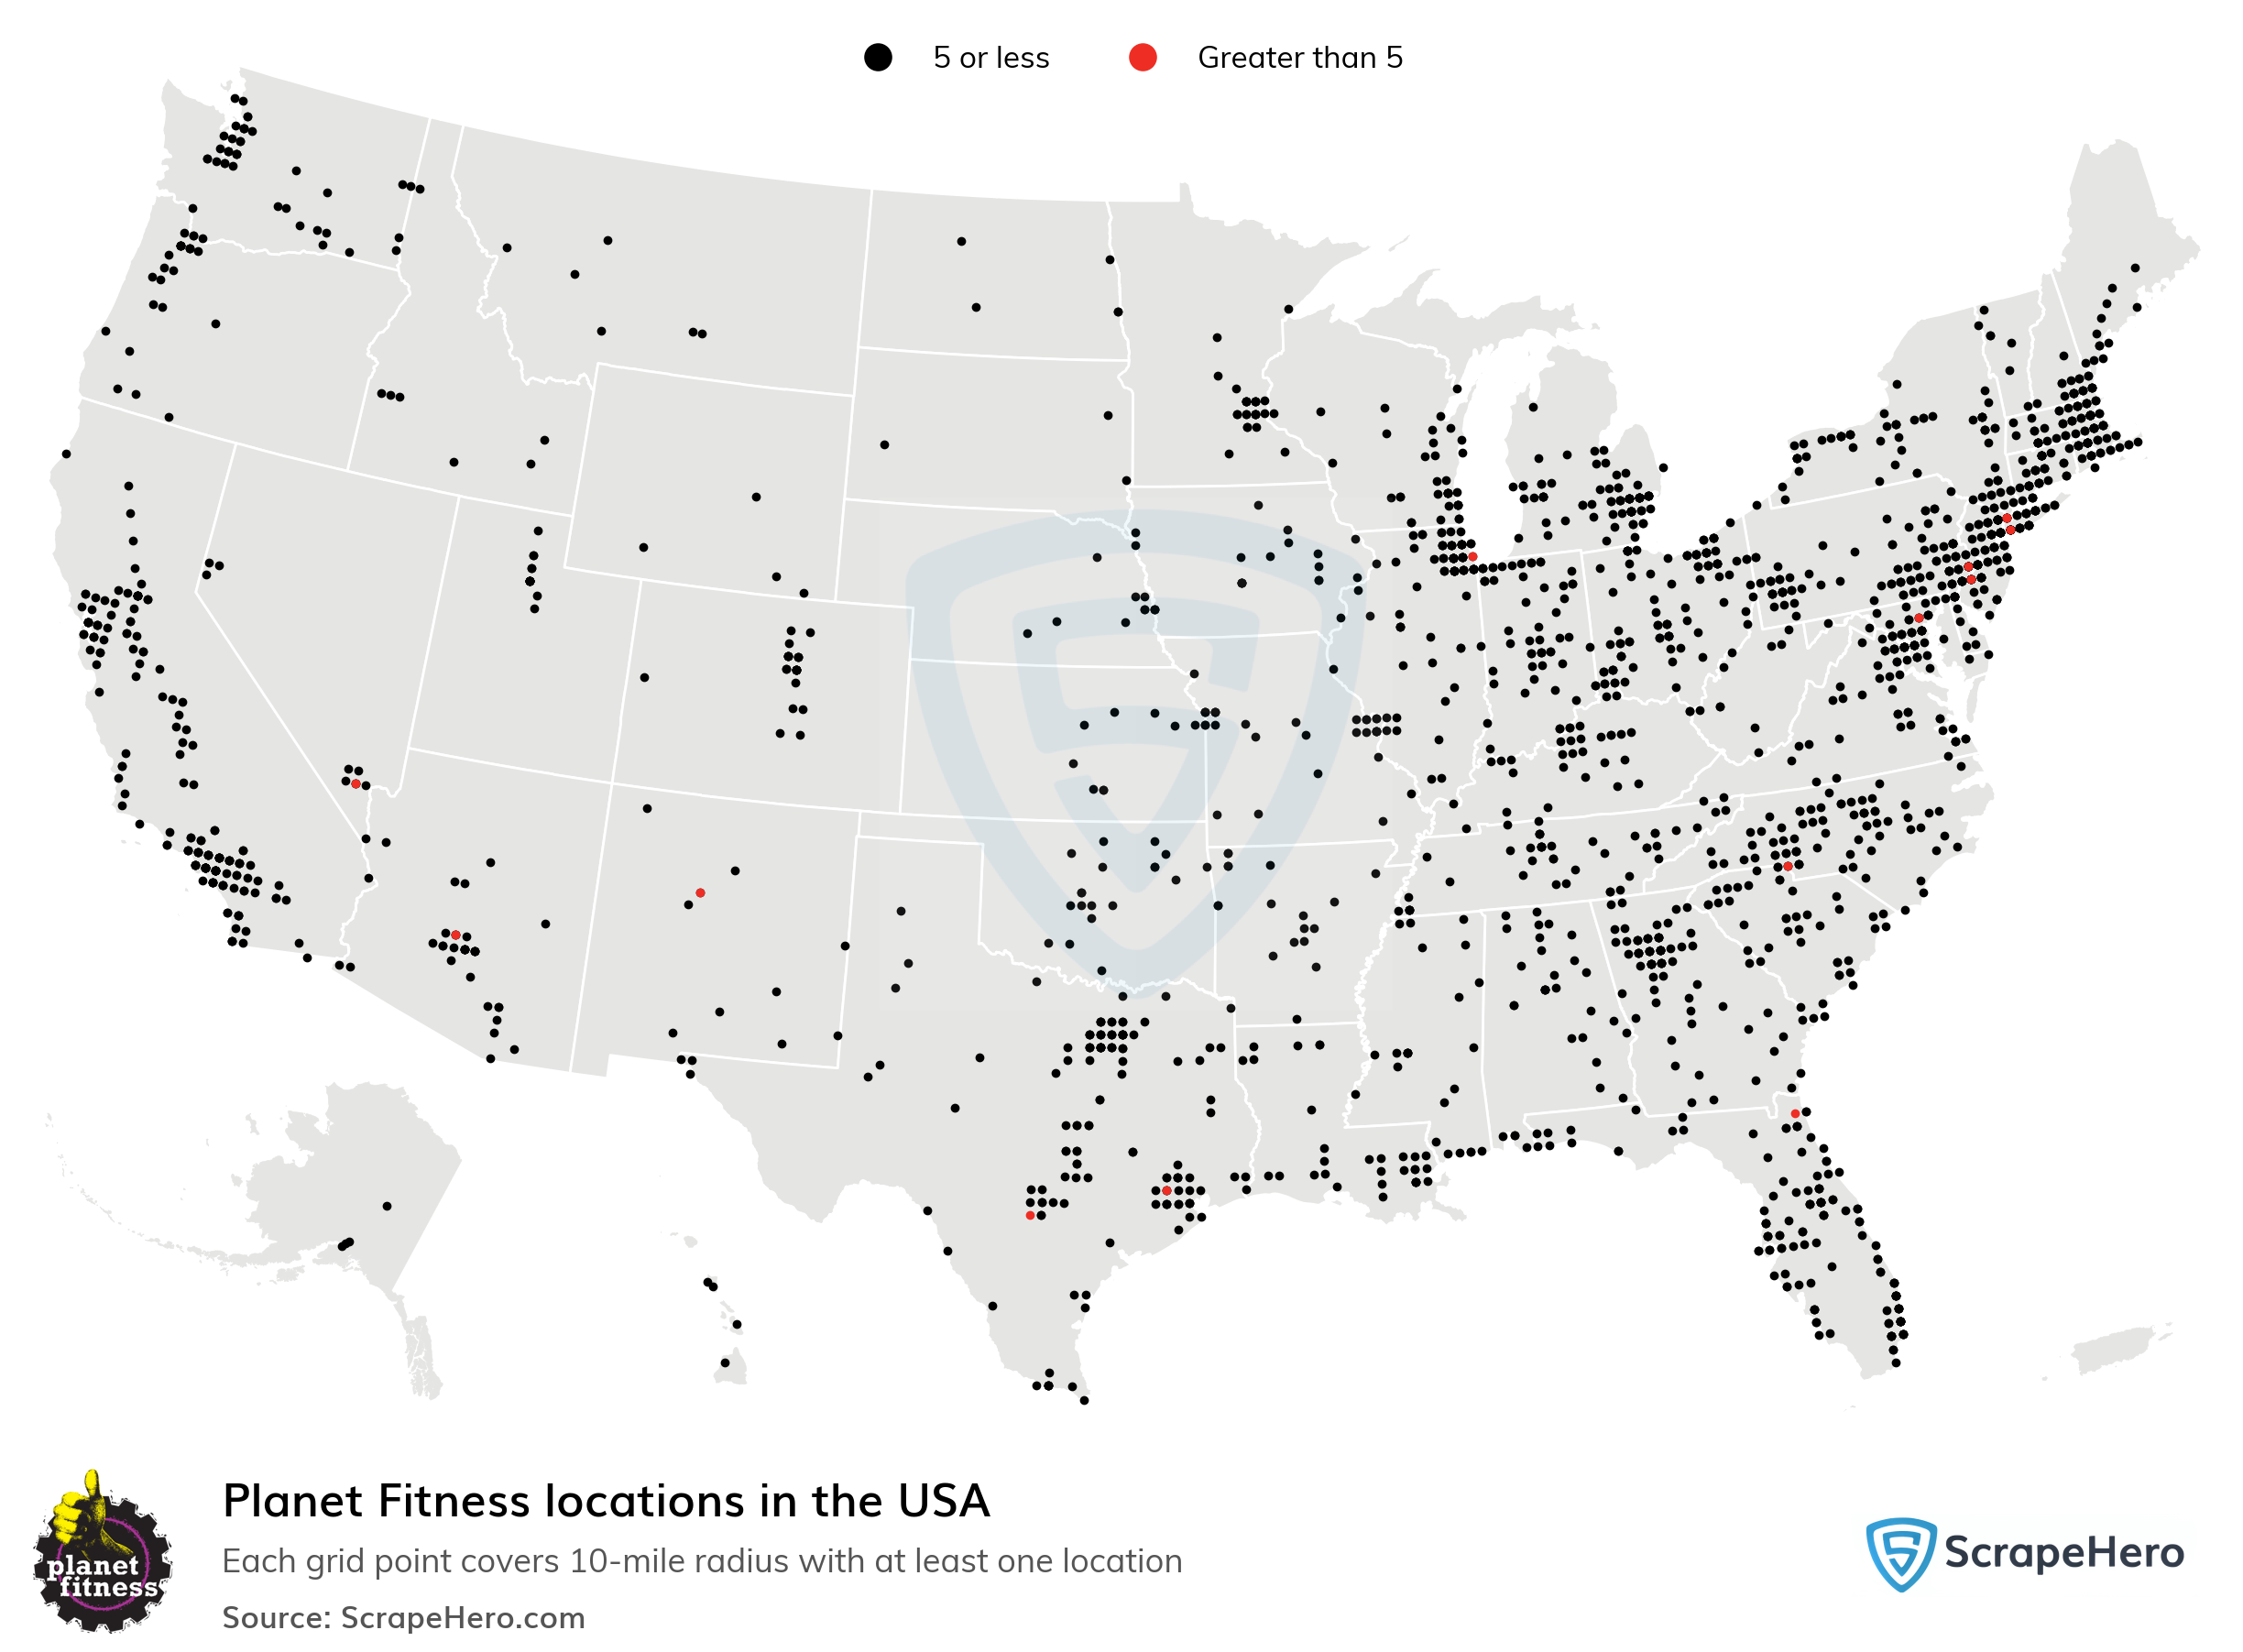 LA Fitness locations in the USA